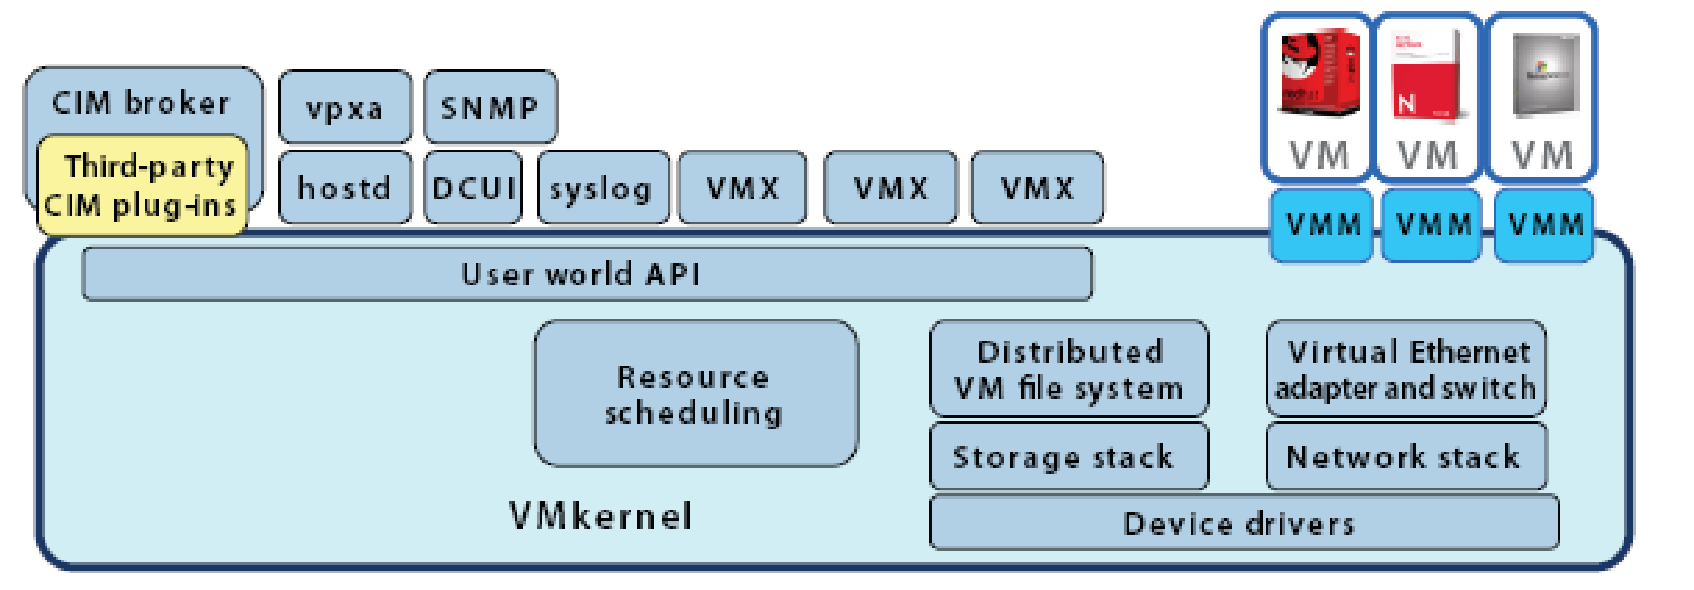 ESX Server Architecture.